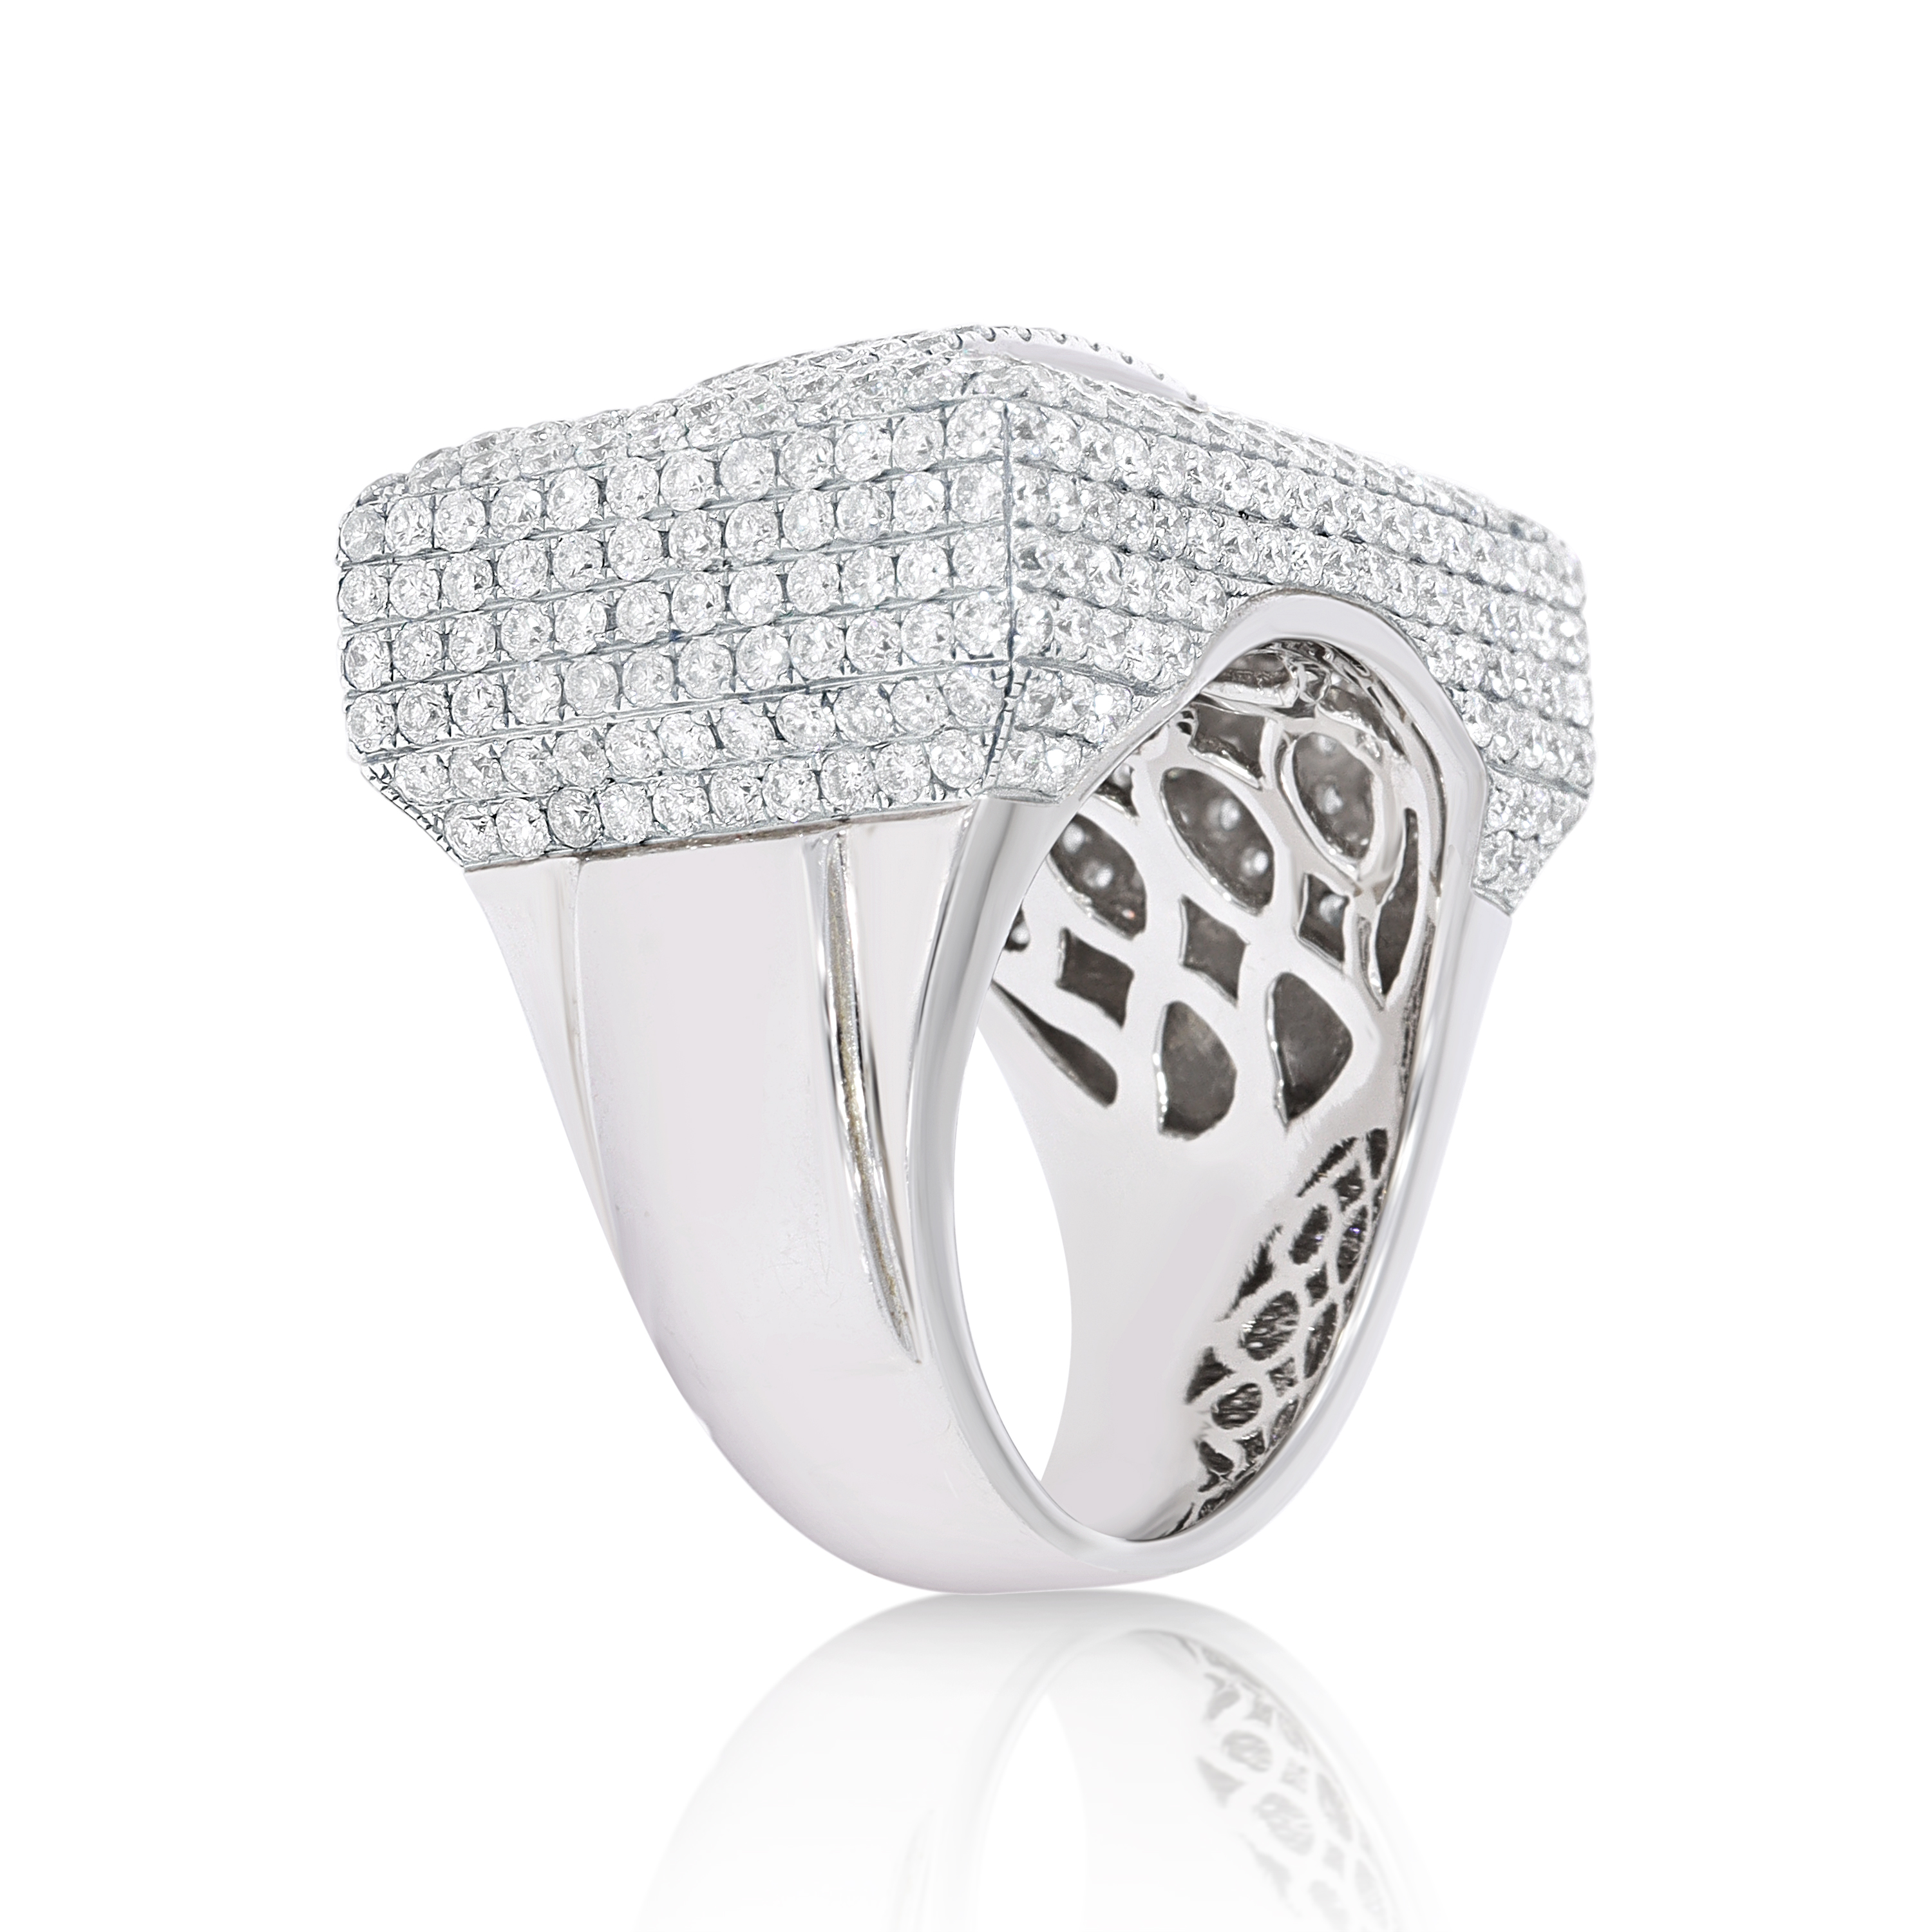 Jumbo Rectangle Diamond Ring 6.60 ct. 14K White Gold